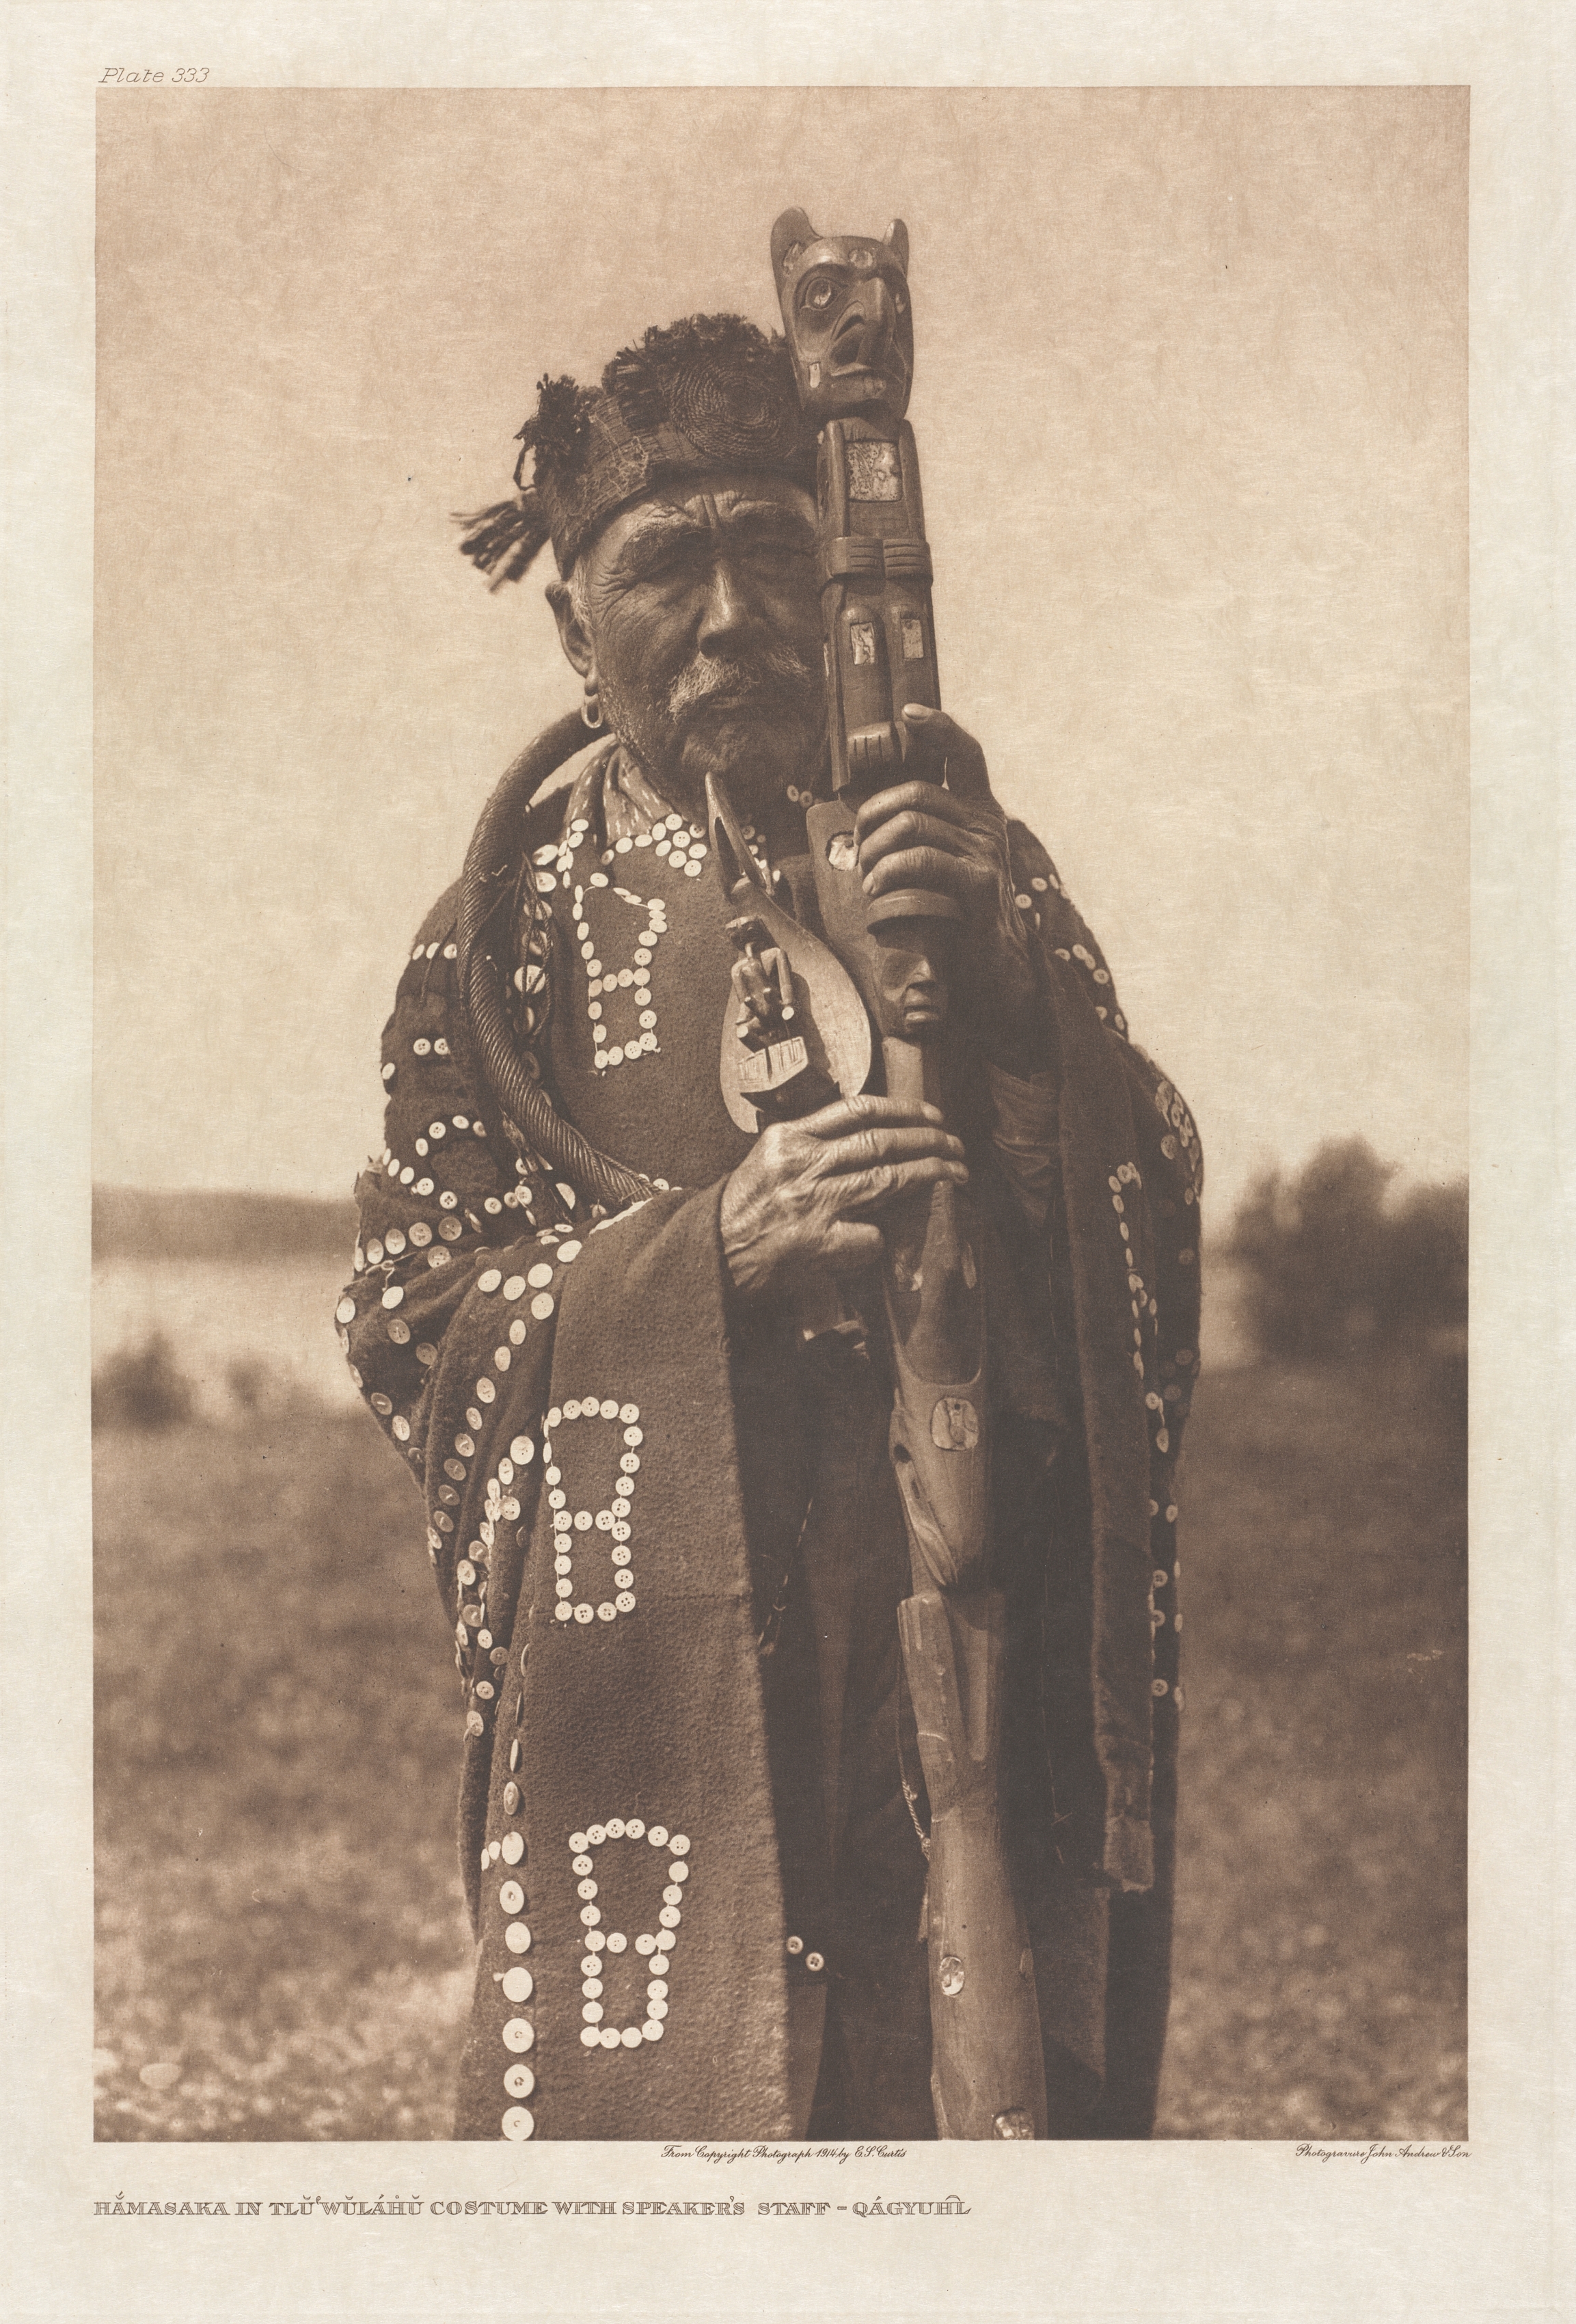 Portfolio X, Plate 333: Hamasaka in Tlu'wuláhu Costume with Speaker's Staff - Qágyuhl